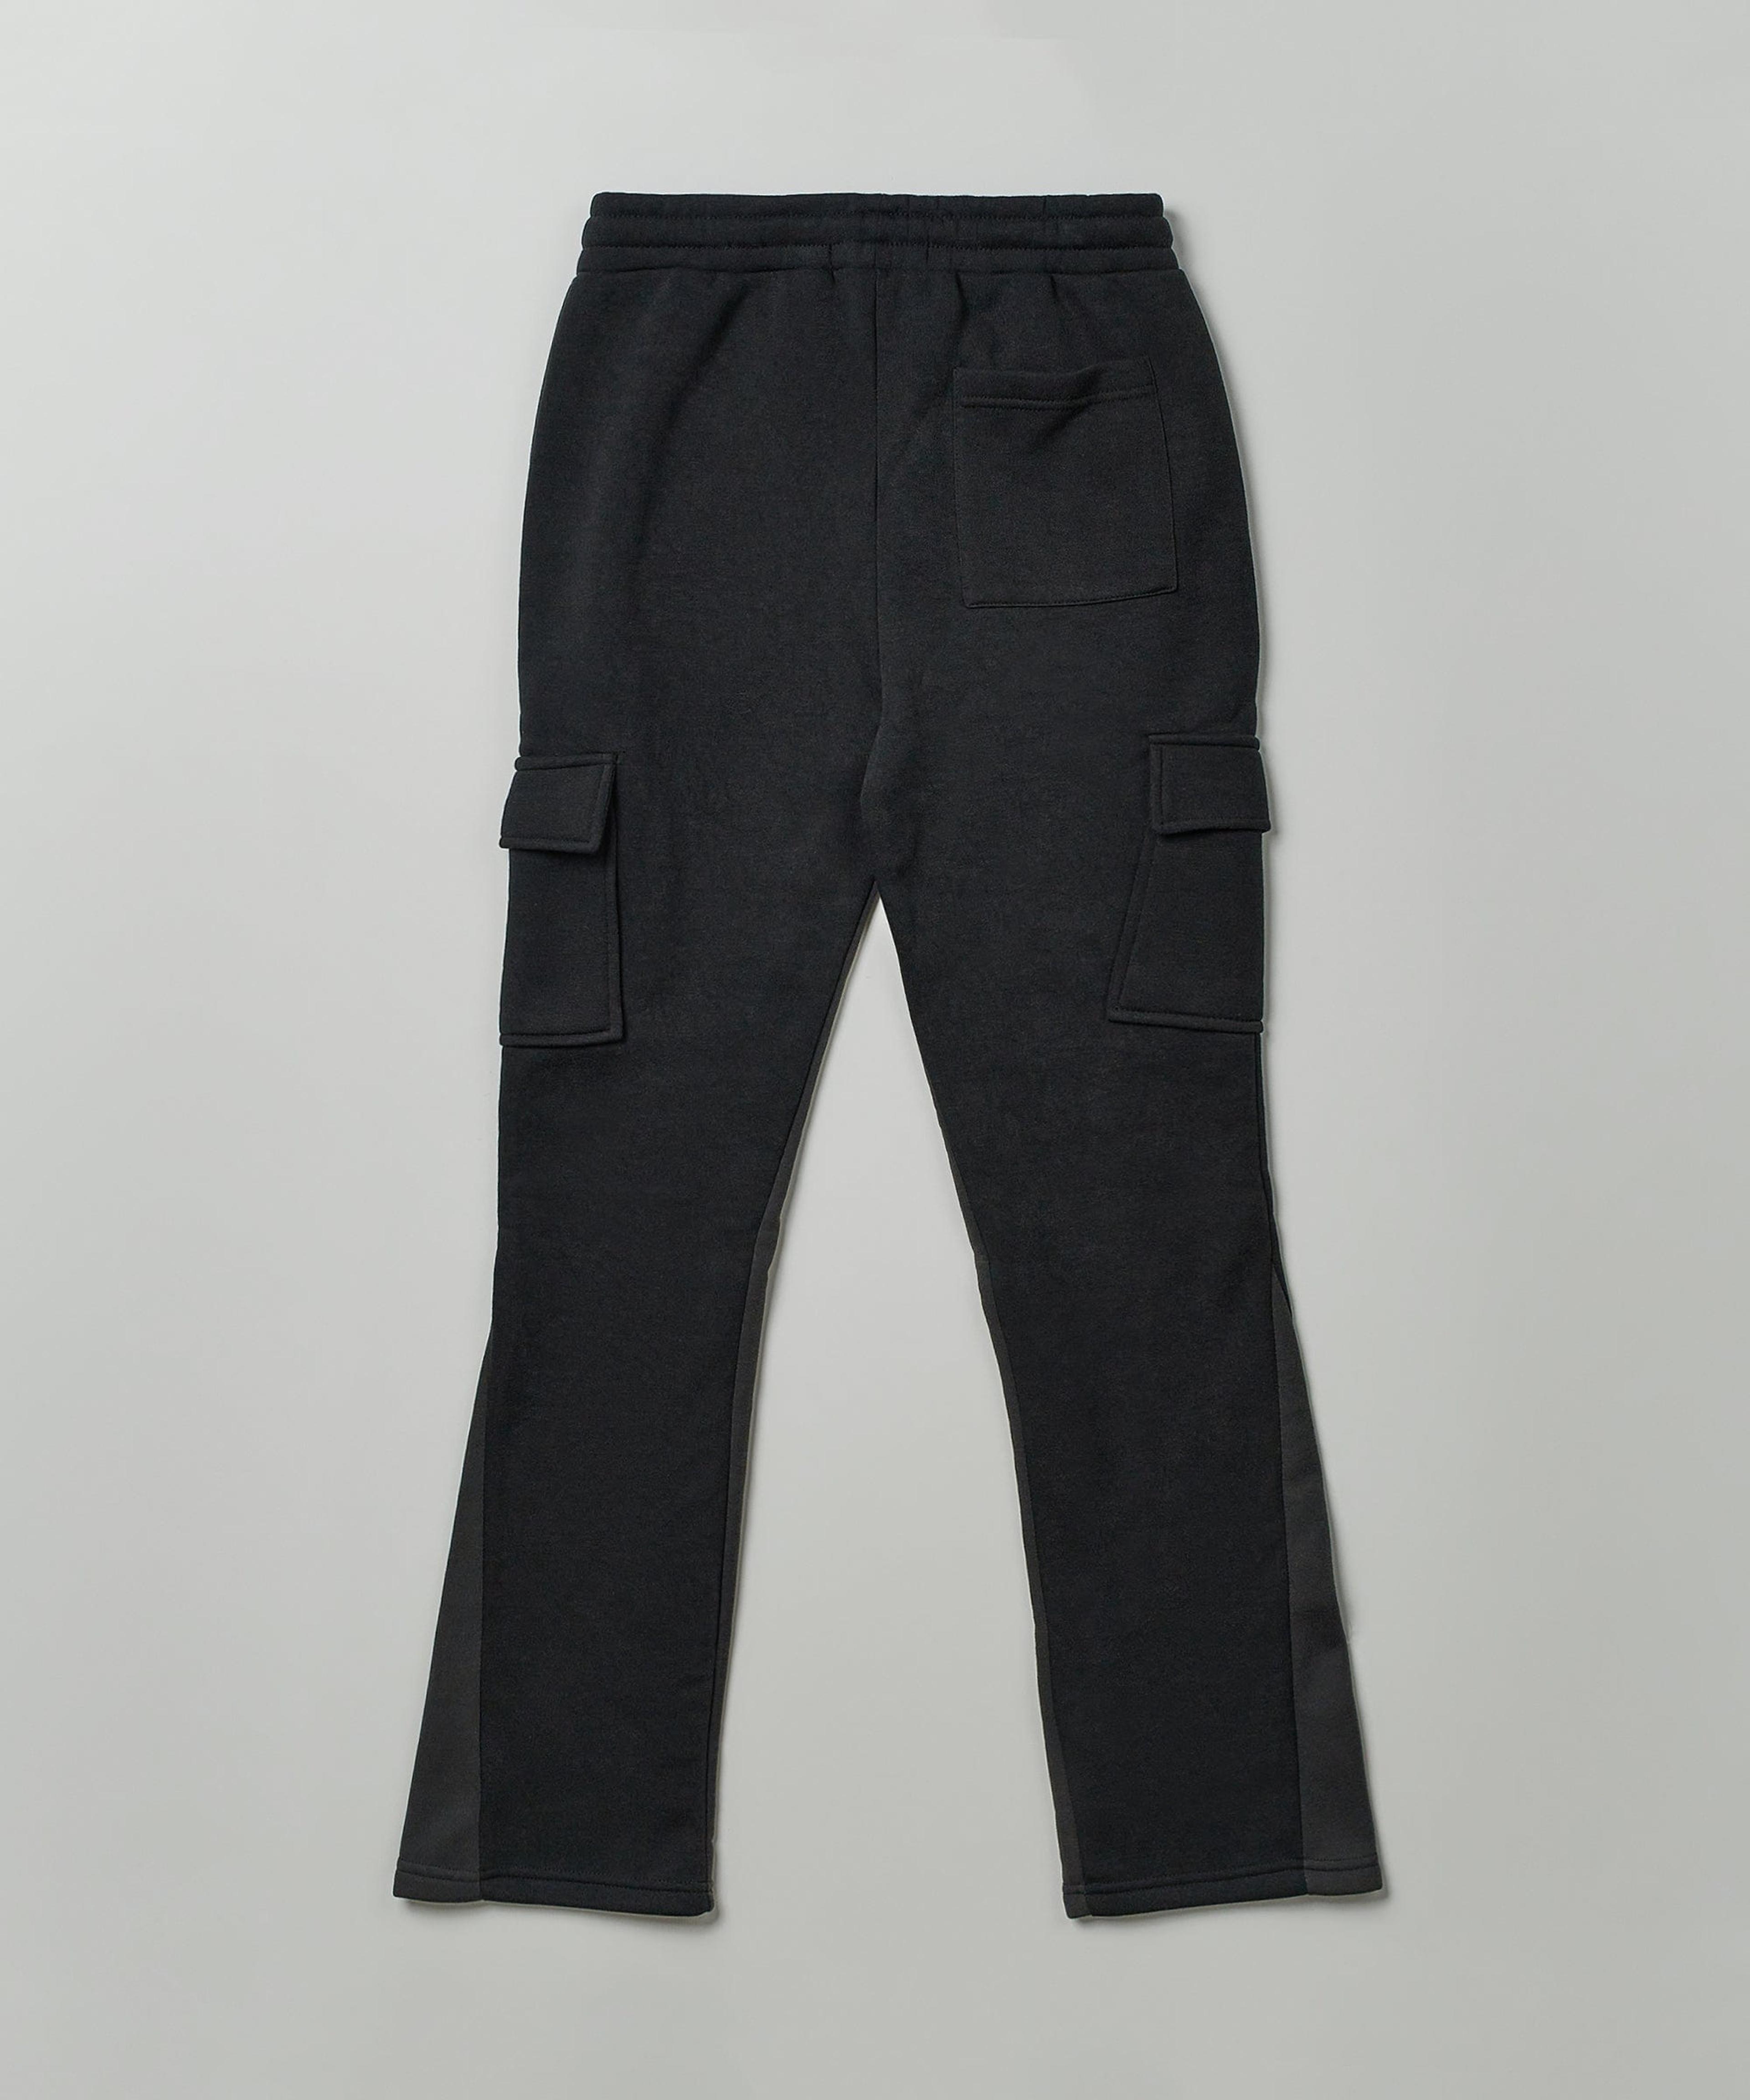 Alternate View 1 of Stacked Fleece Cargo Sweatpants - Black